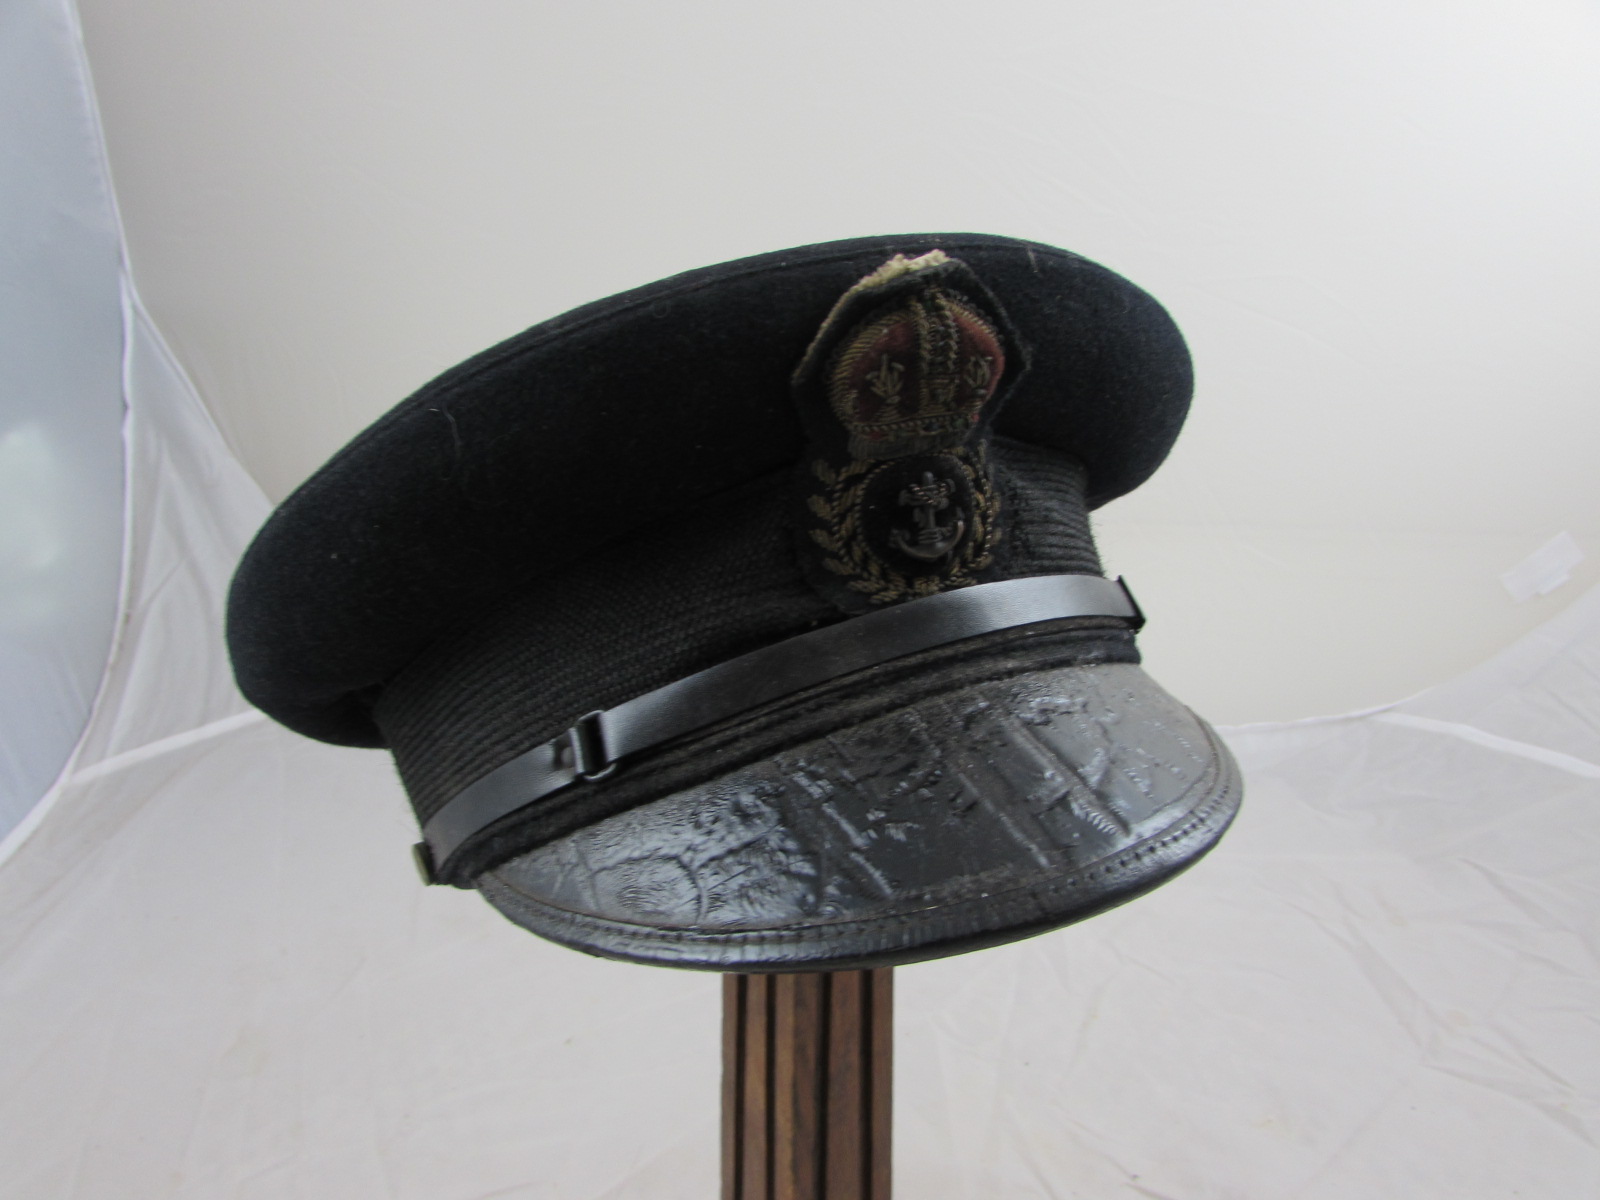 WW11 Royal Navy, Petty Officer's Peaked Cap